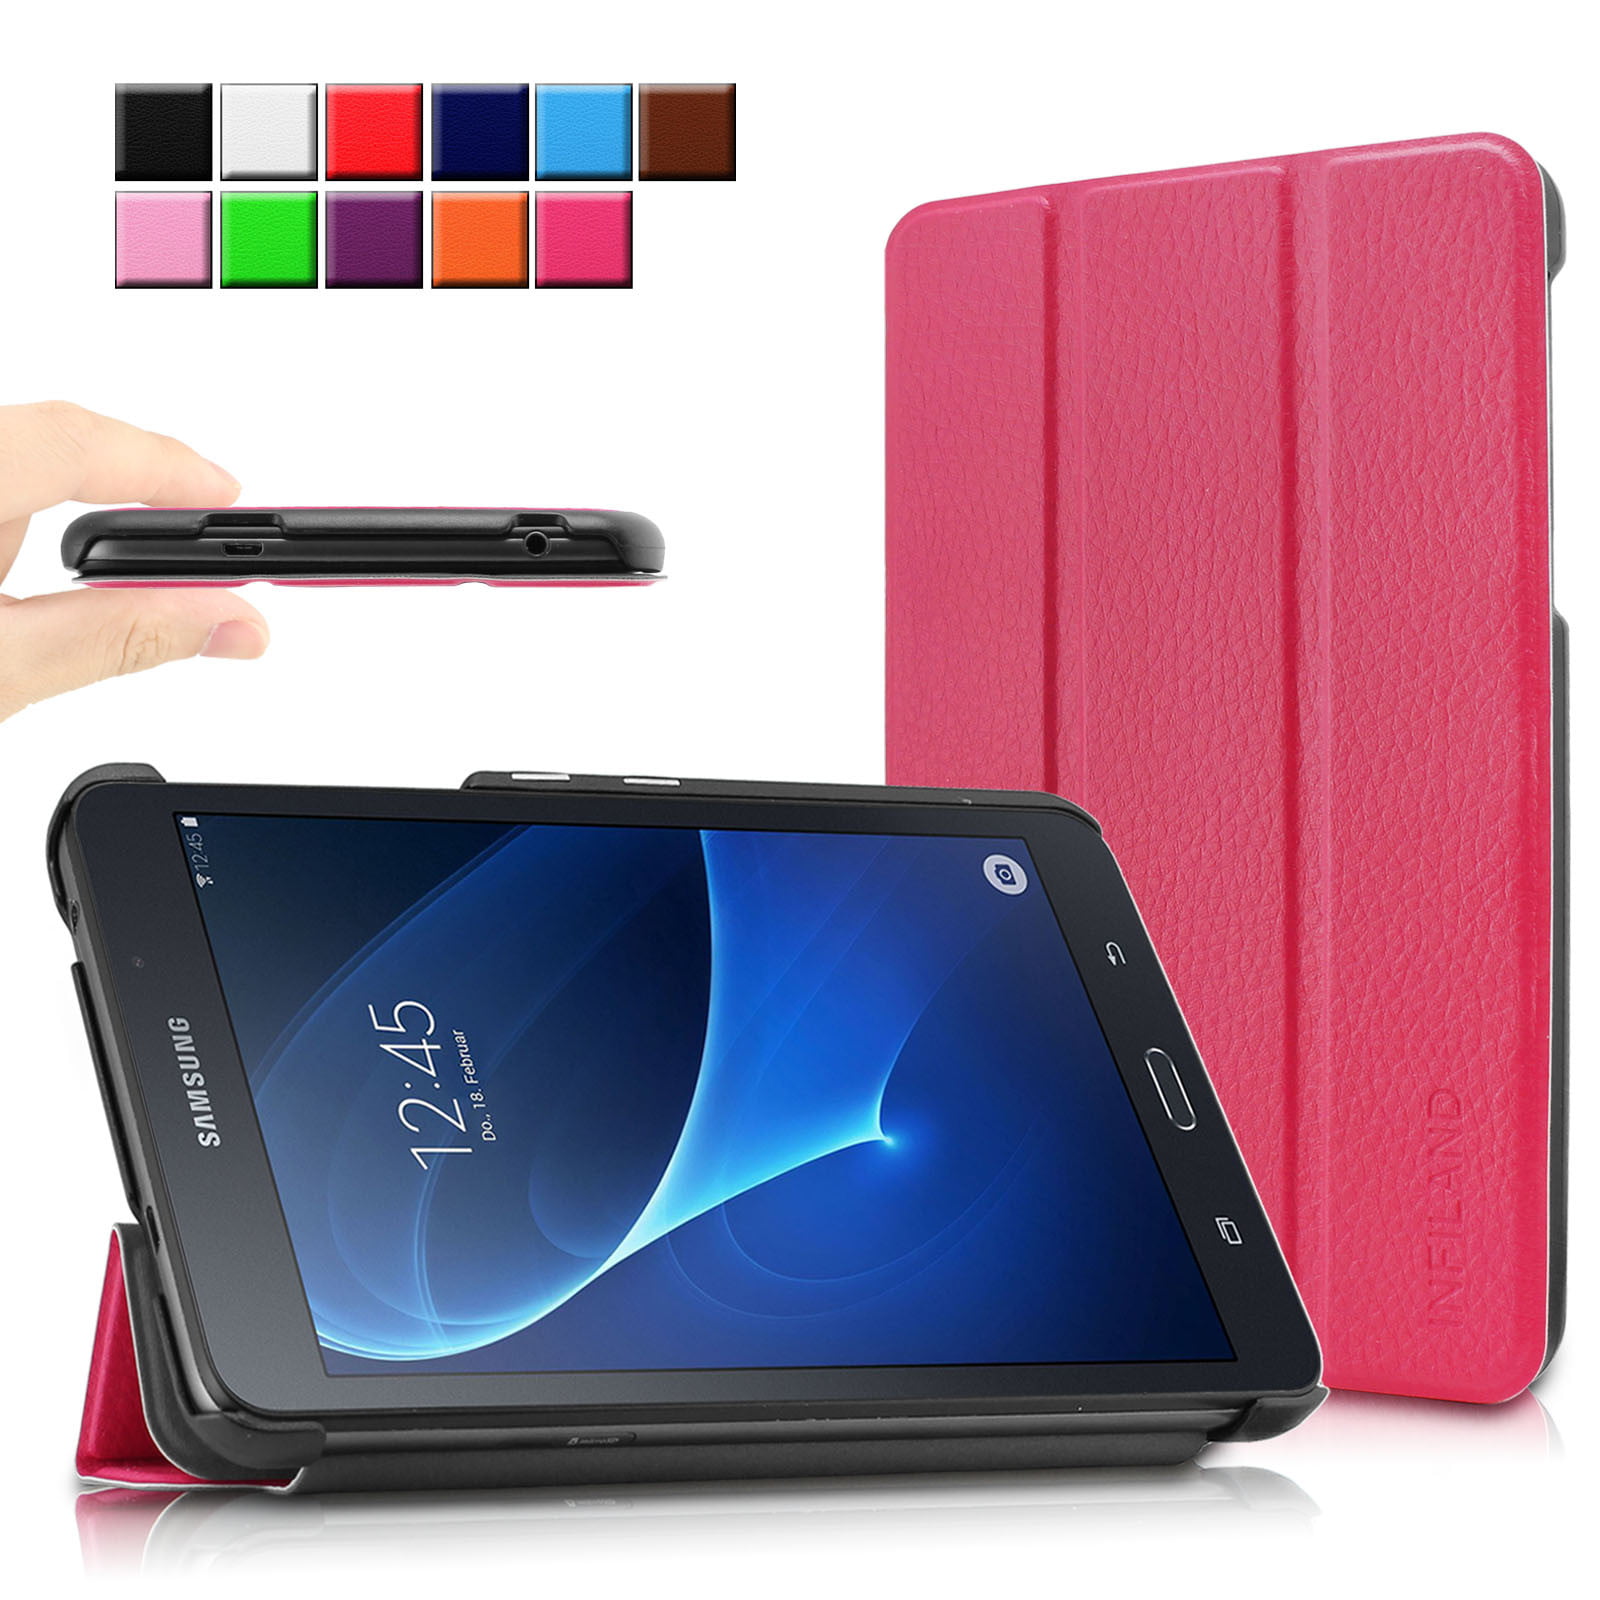 Galaxy Tab A 7.0 Case, Infiland Ultra Smart Cover For Samsung Galaxy Tab A 7.0 7Inch Tablet